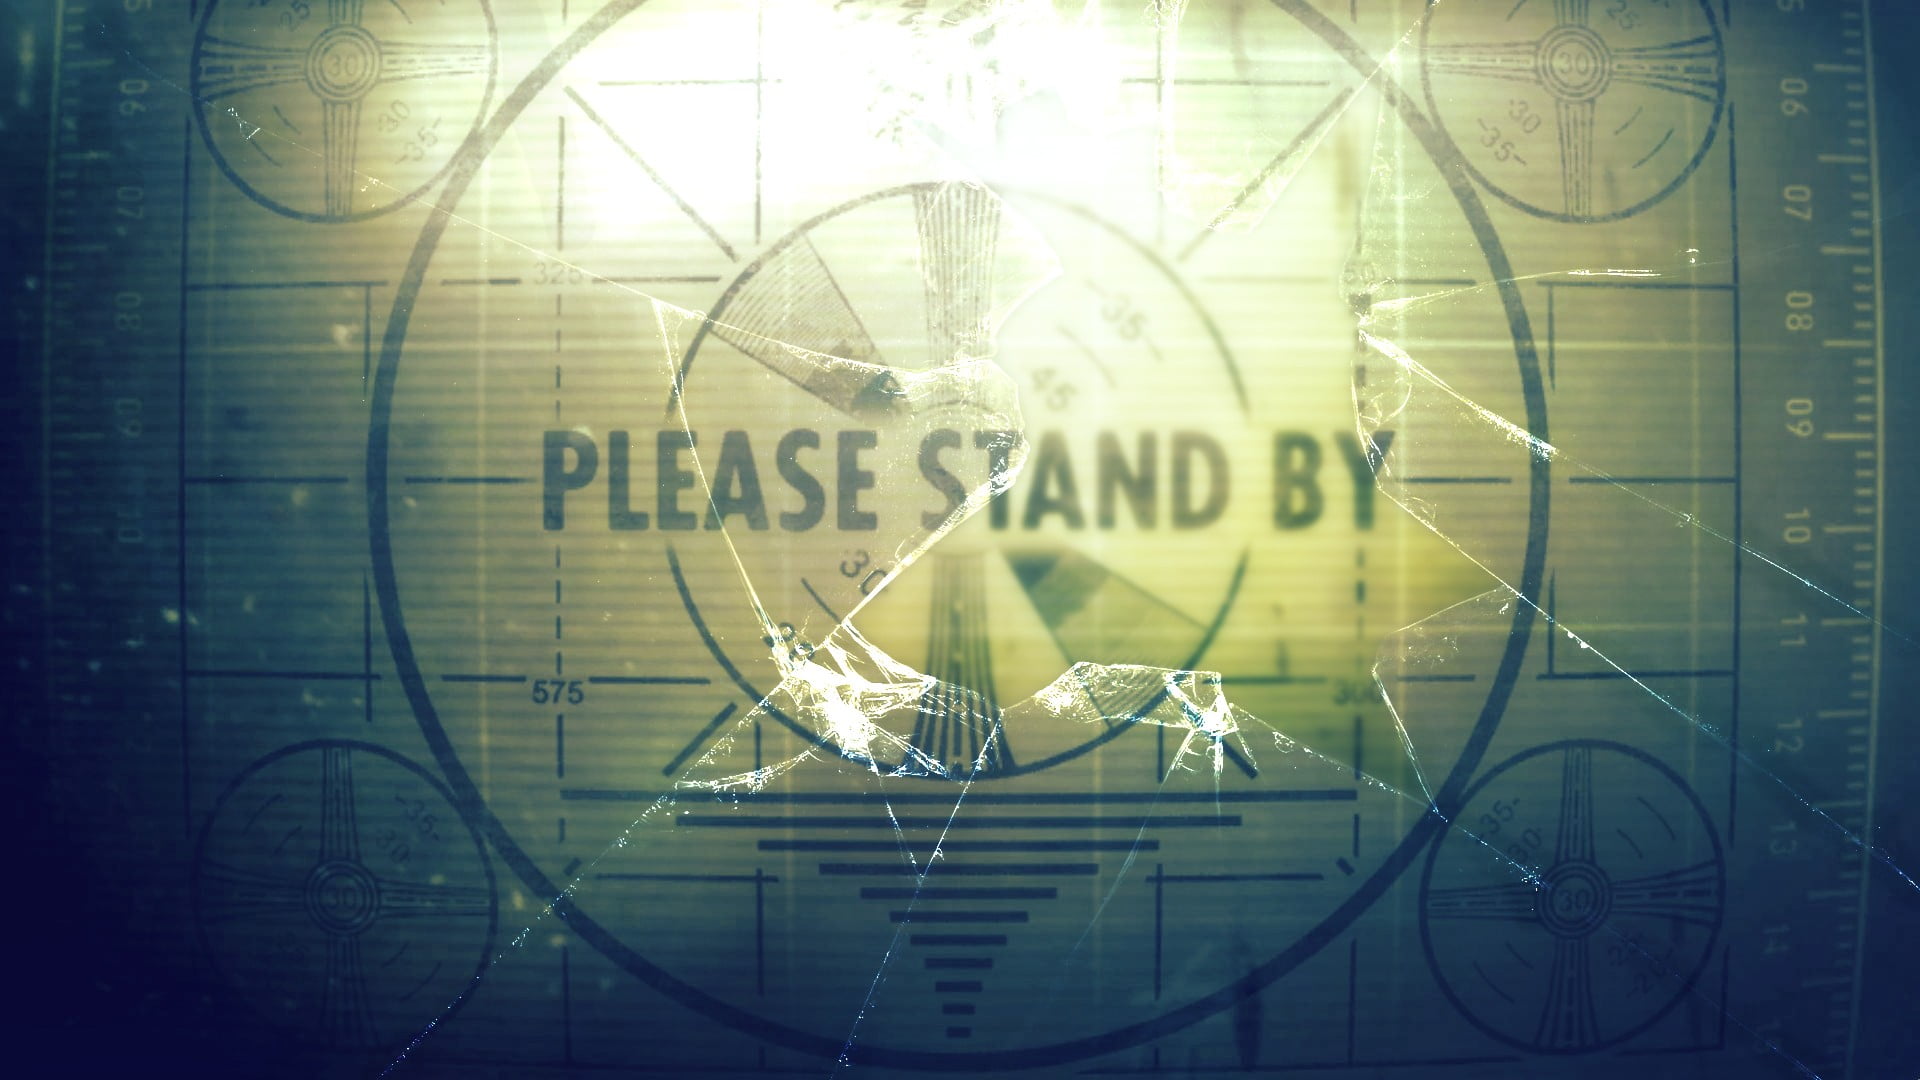 Please Stand By screenshot, test patterns, Fallout, broken glass